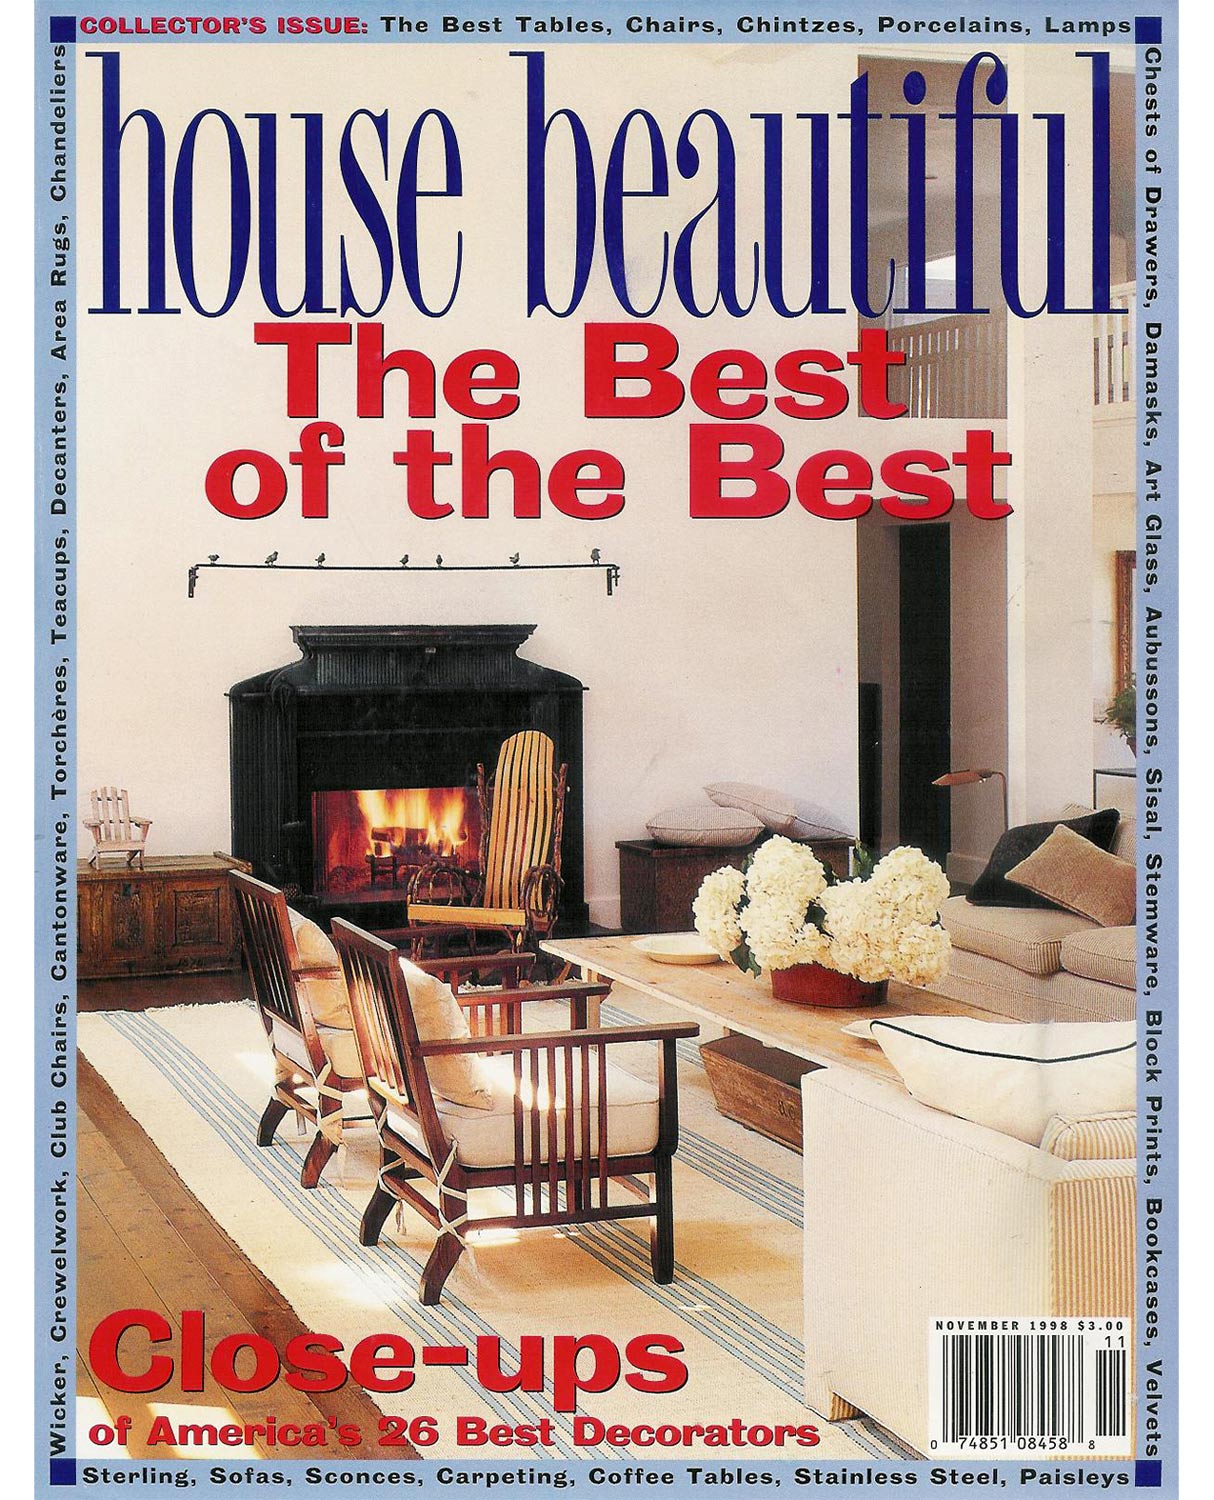 housebeautiful1998-cover_alemanmoore.jpg